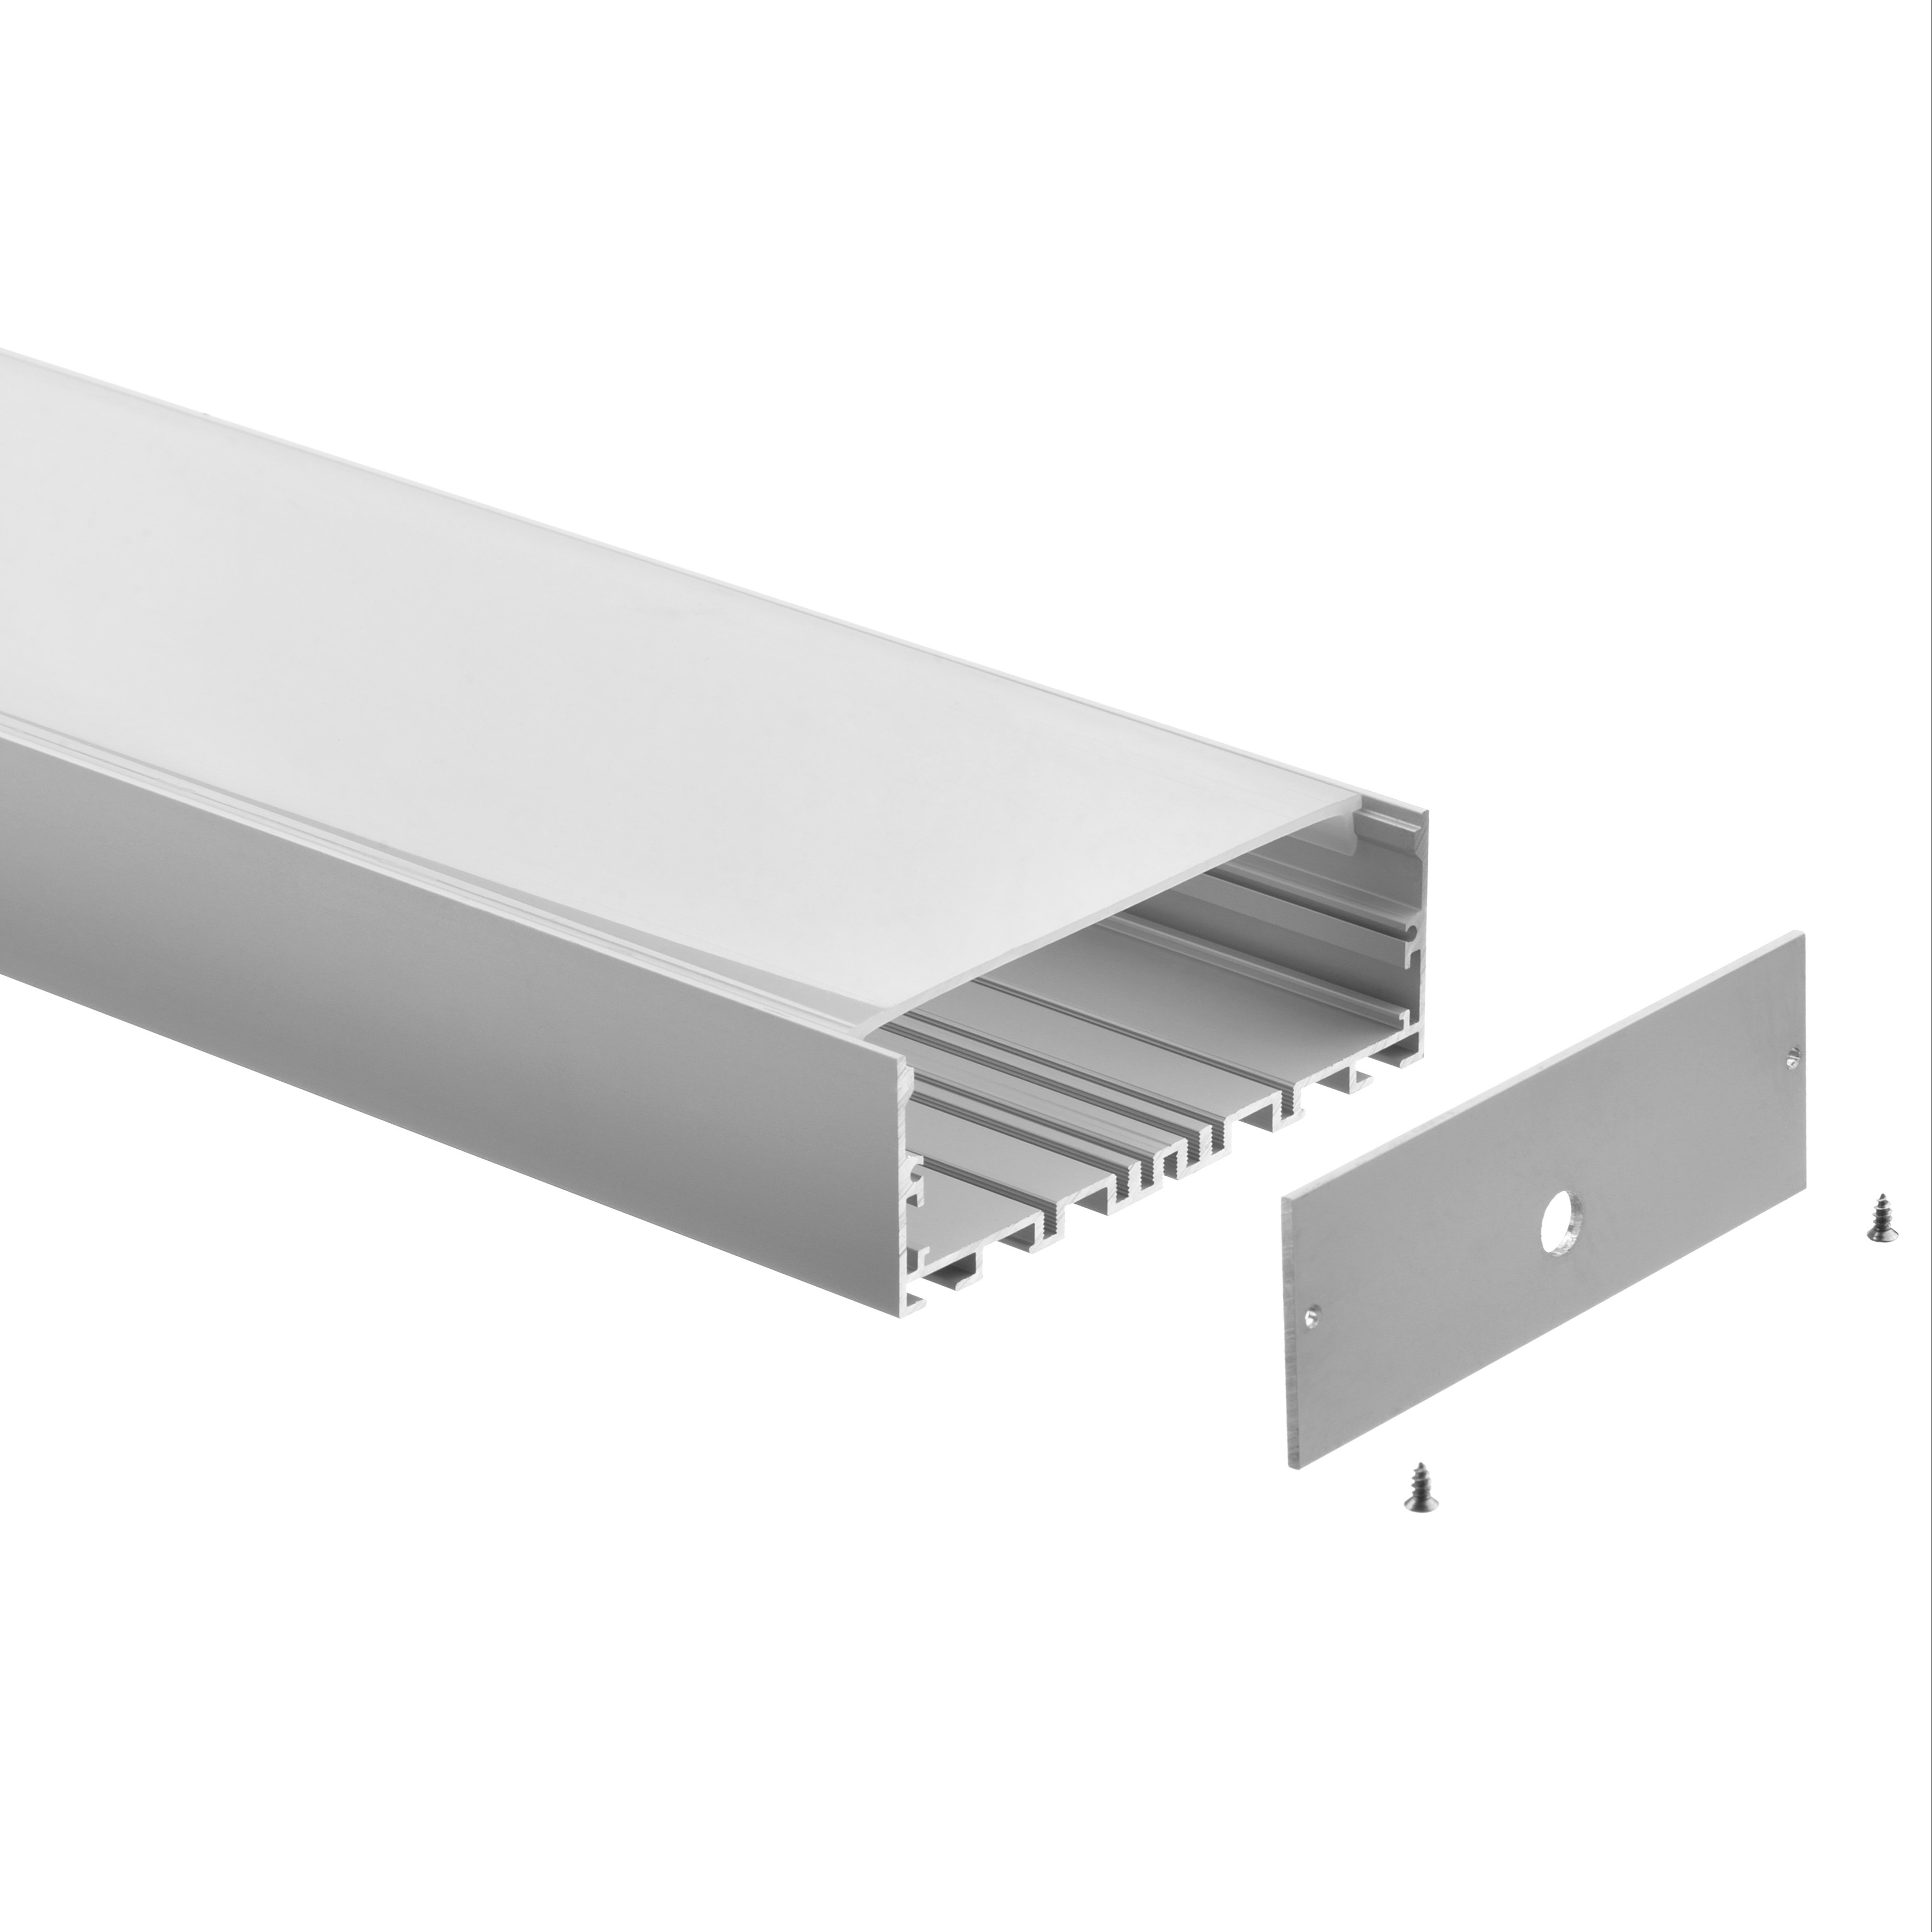 Best Large Aluminium Light Channel Suspended Decorative Profiles For LED Tape wholesale